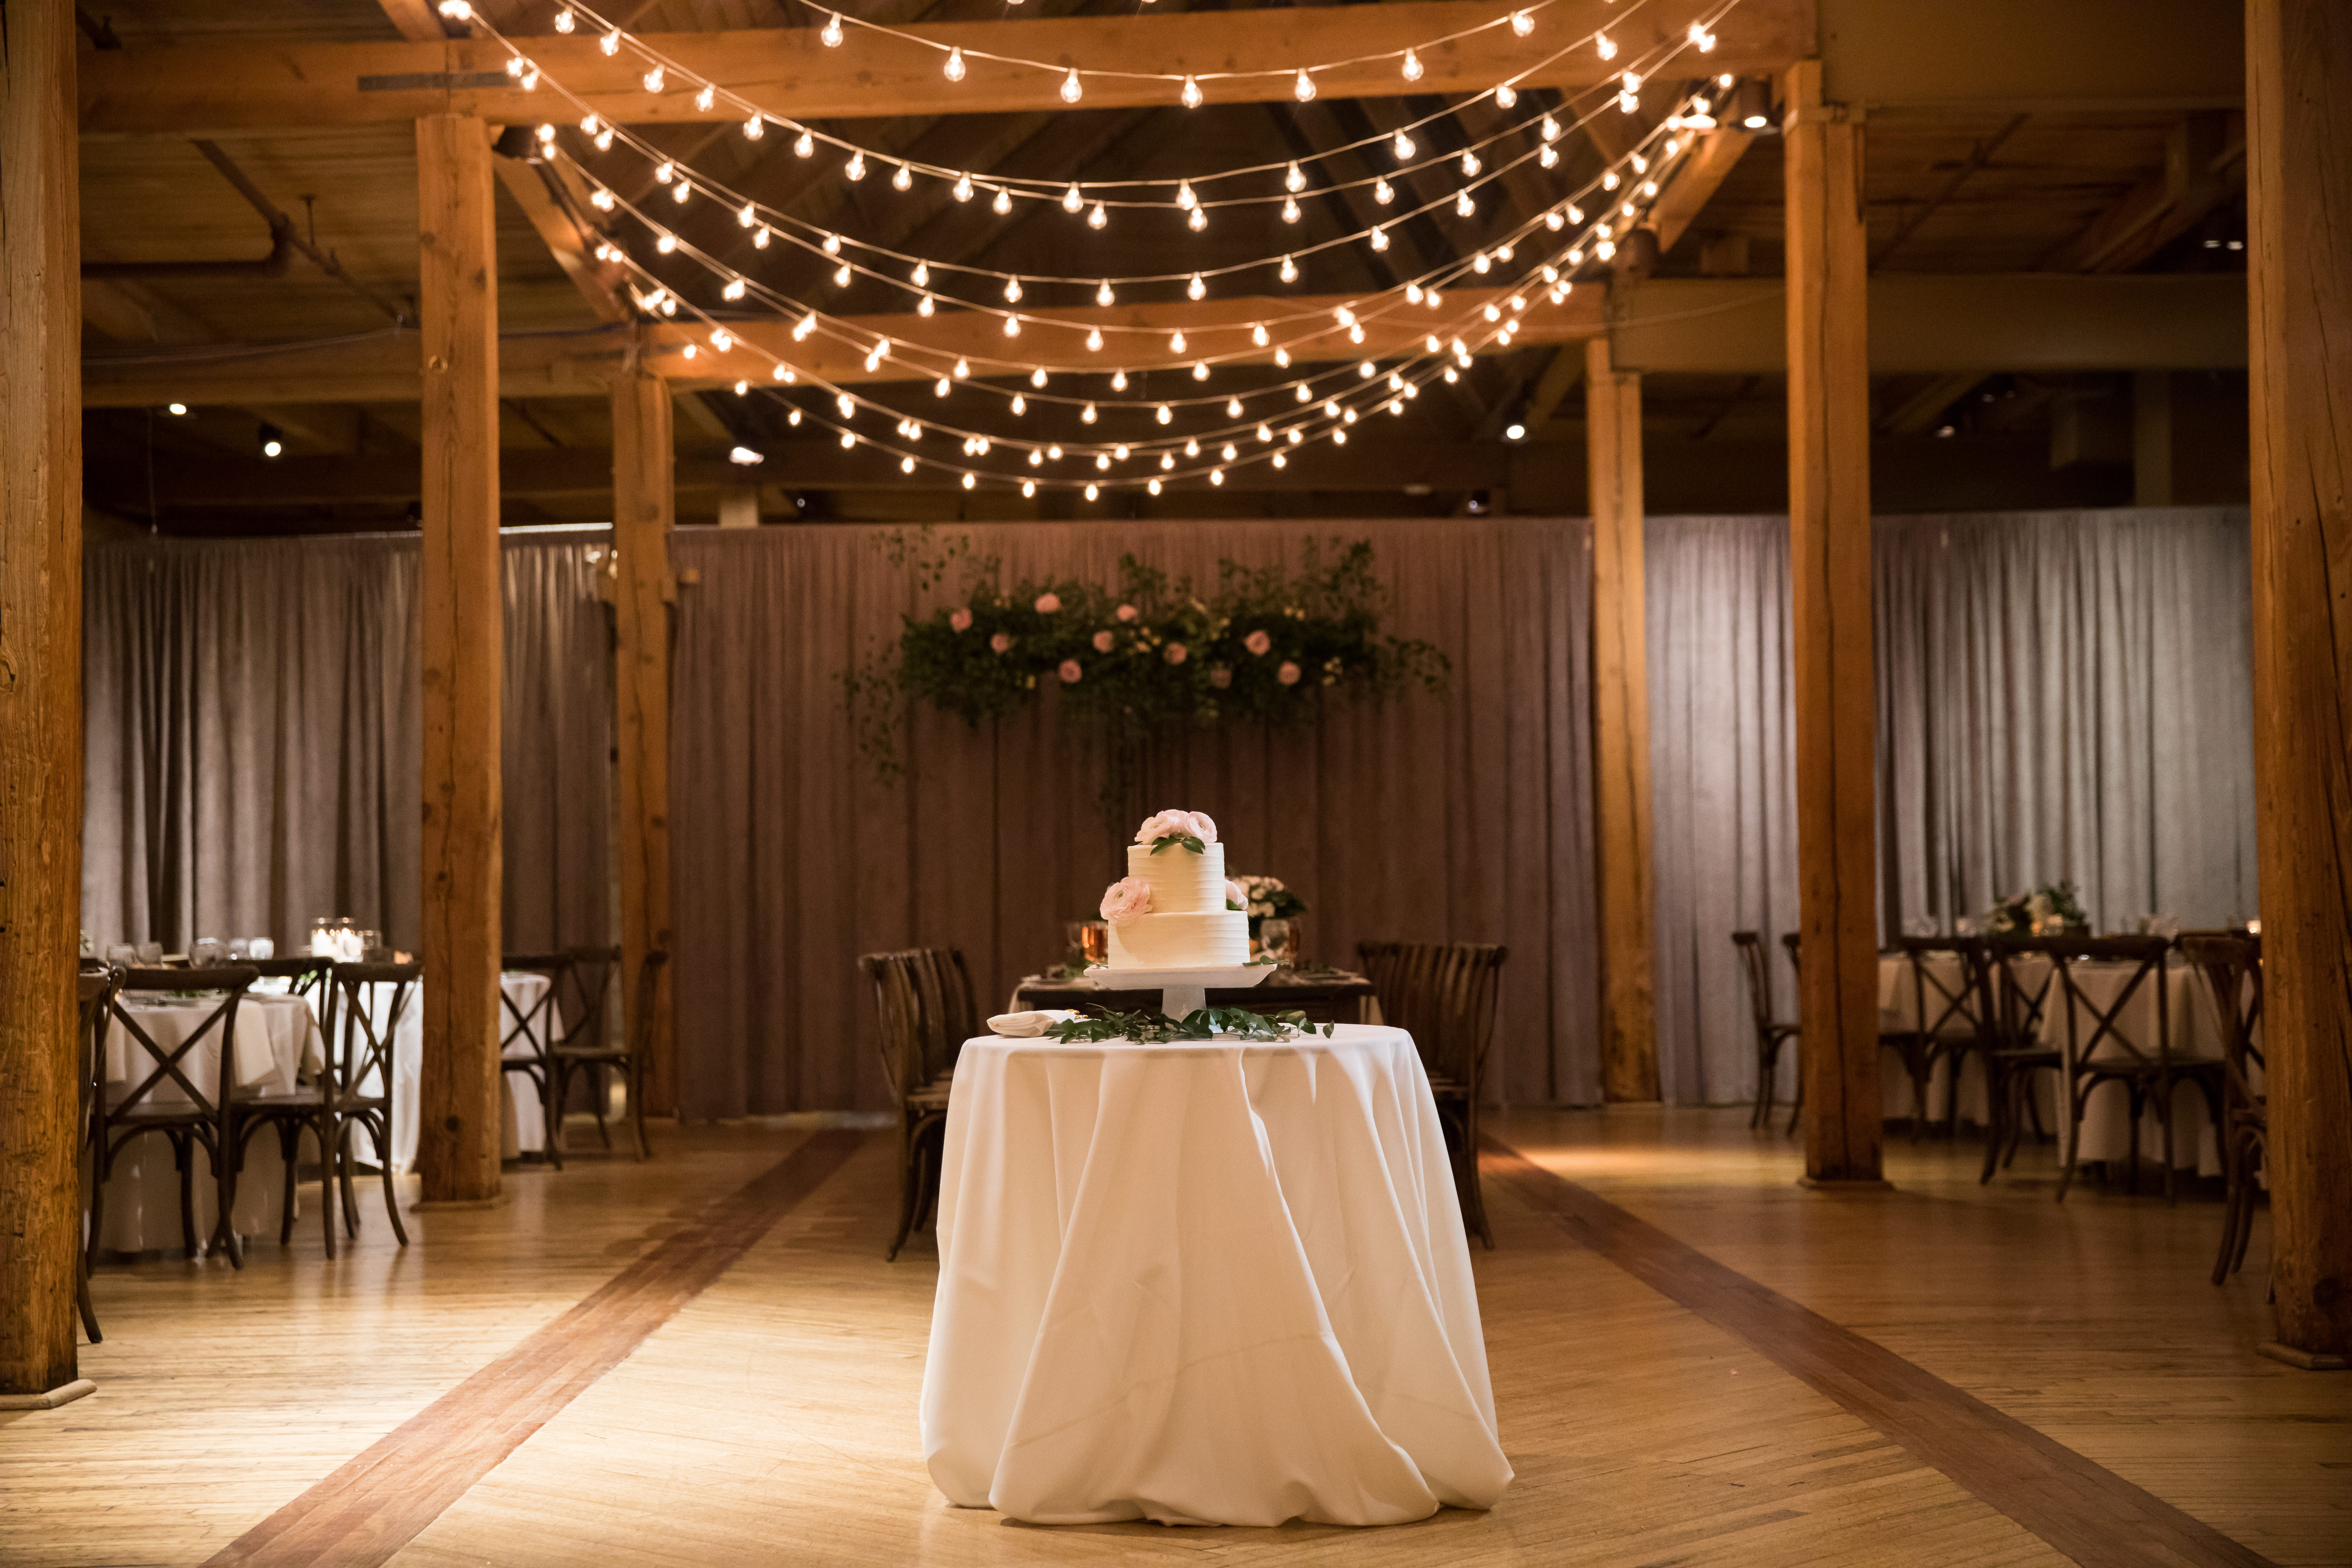 Winter wedding cake with blush ranunculus and string lights at Bridgeport Art Center Skyline Loft.